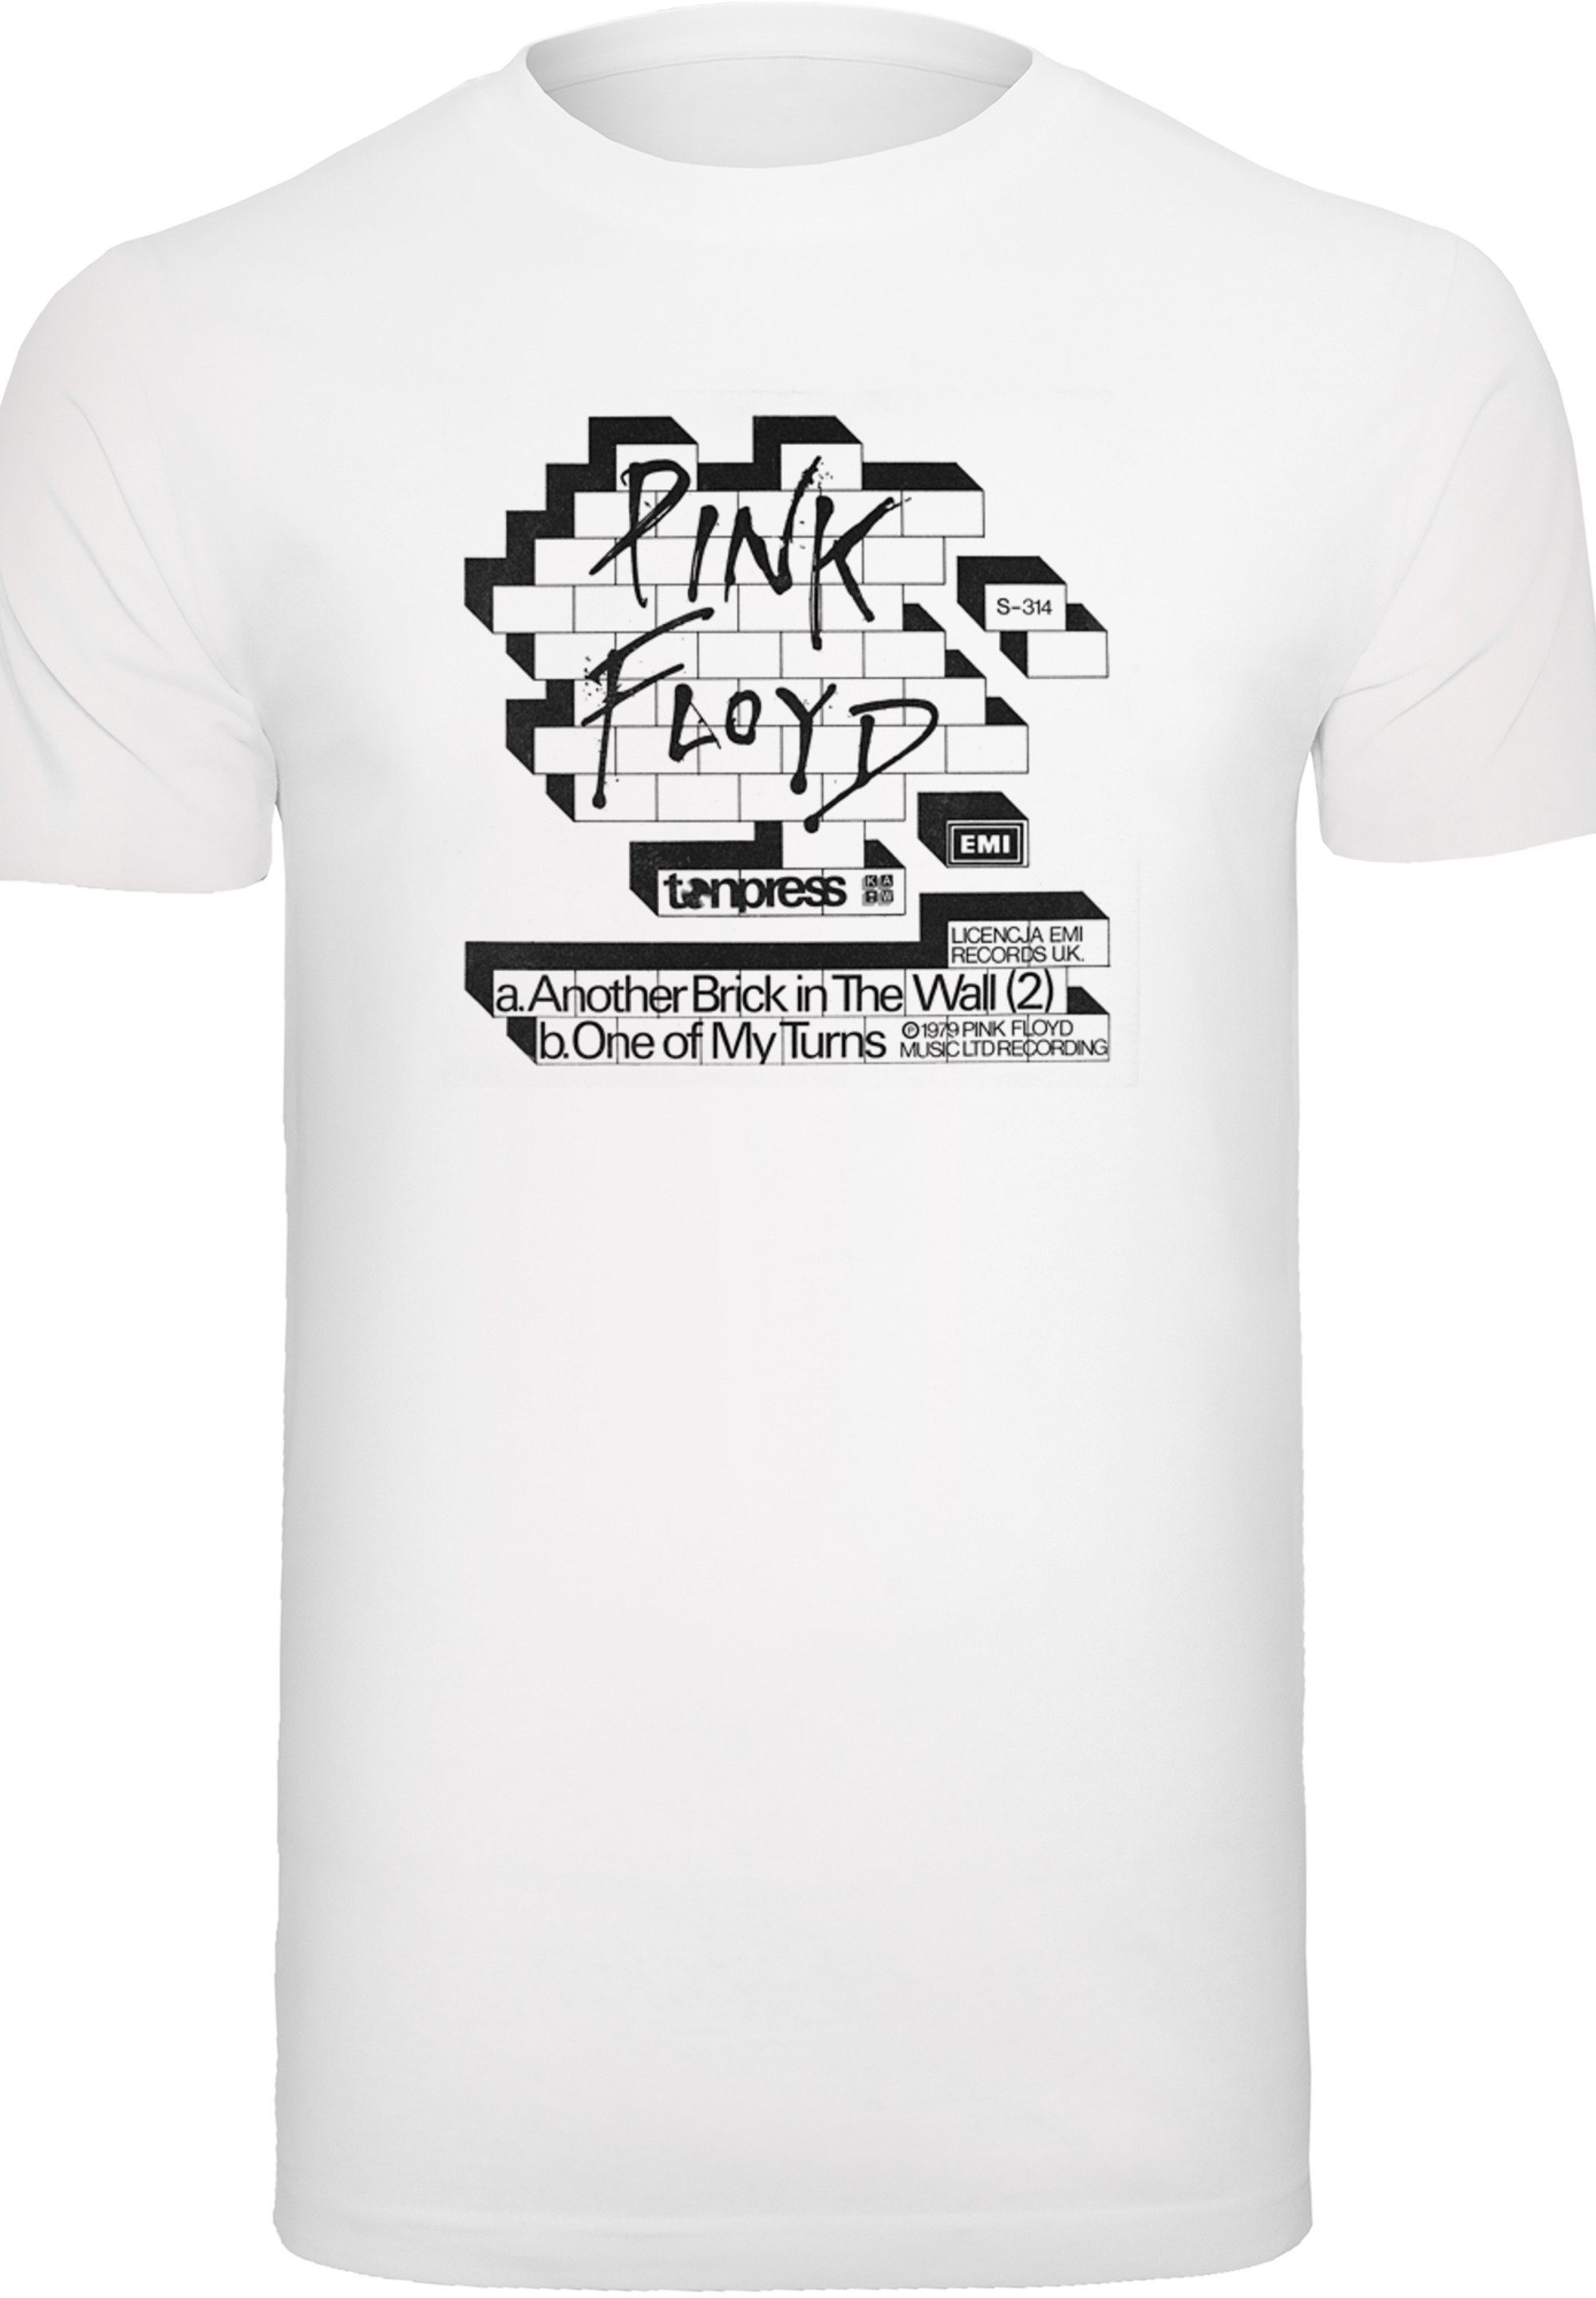 F4NT4STIC T-Shirt Pink Floyd Cover Merch,Regular-Fit,Basic,Bandshirt Another Album The Wall Brick in Herren,Premium